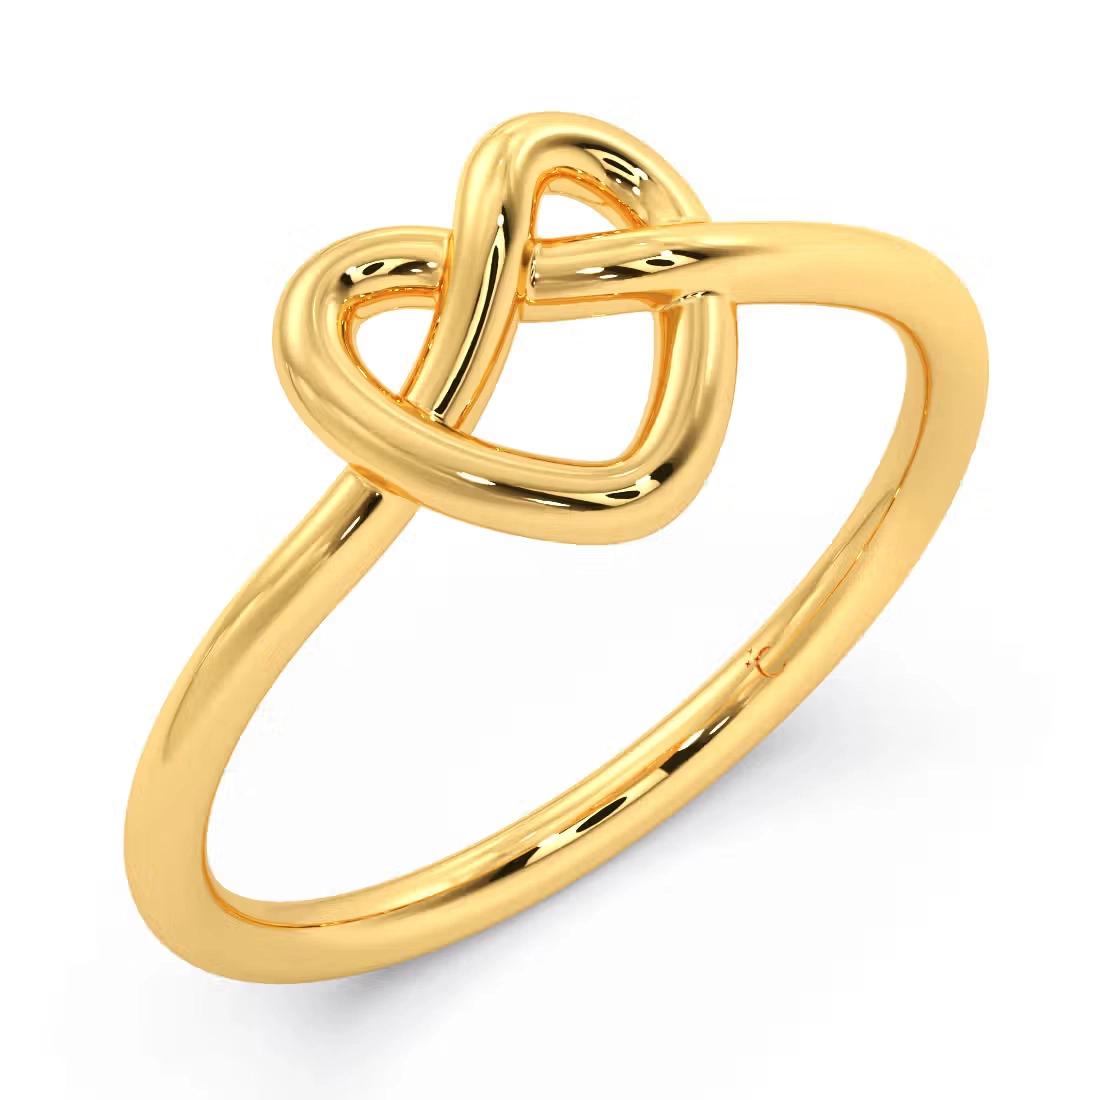 Buy Yellow Gold & White Rings for Men by Iski Uski Online | Ajio.com